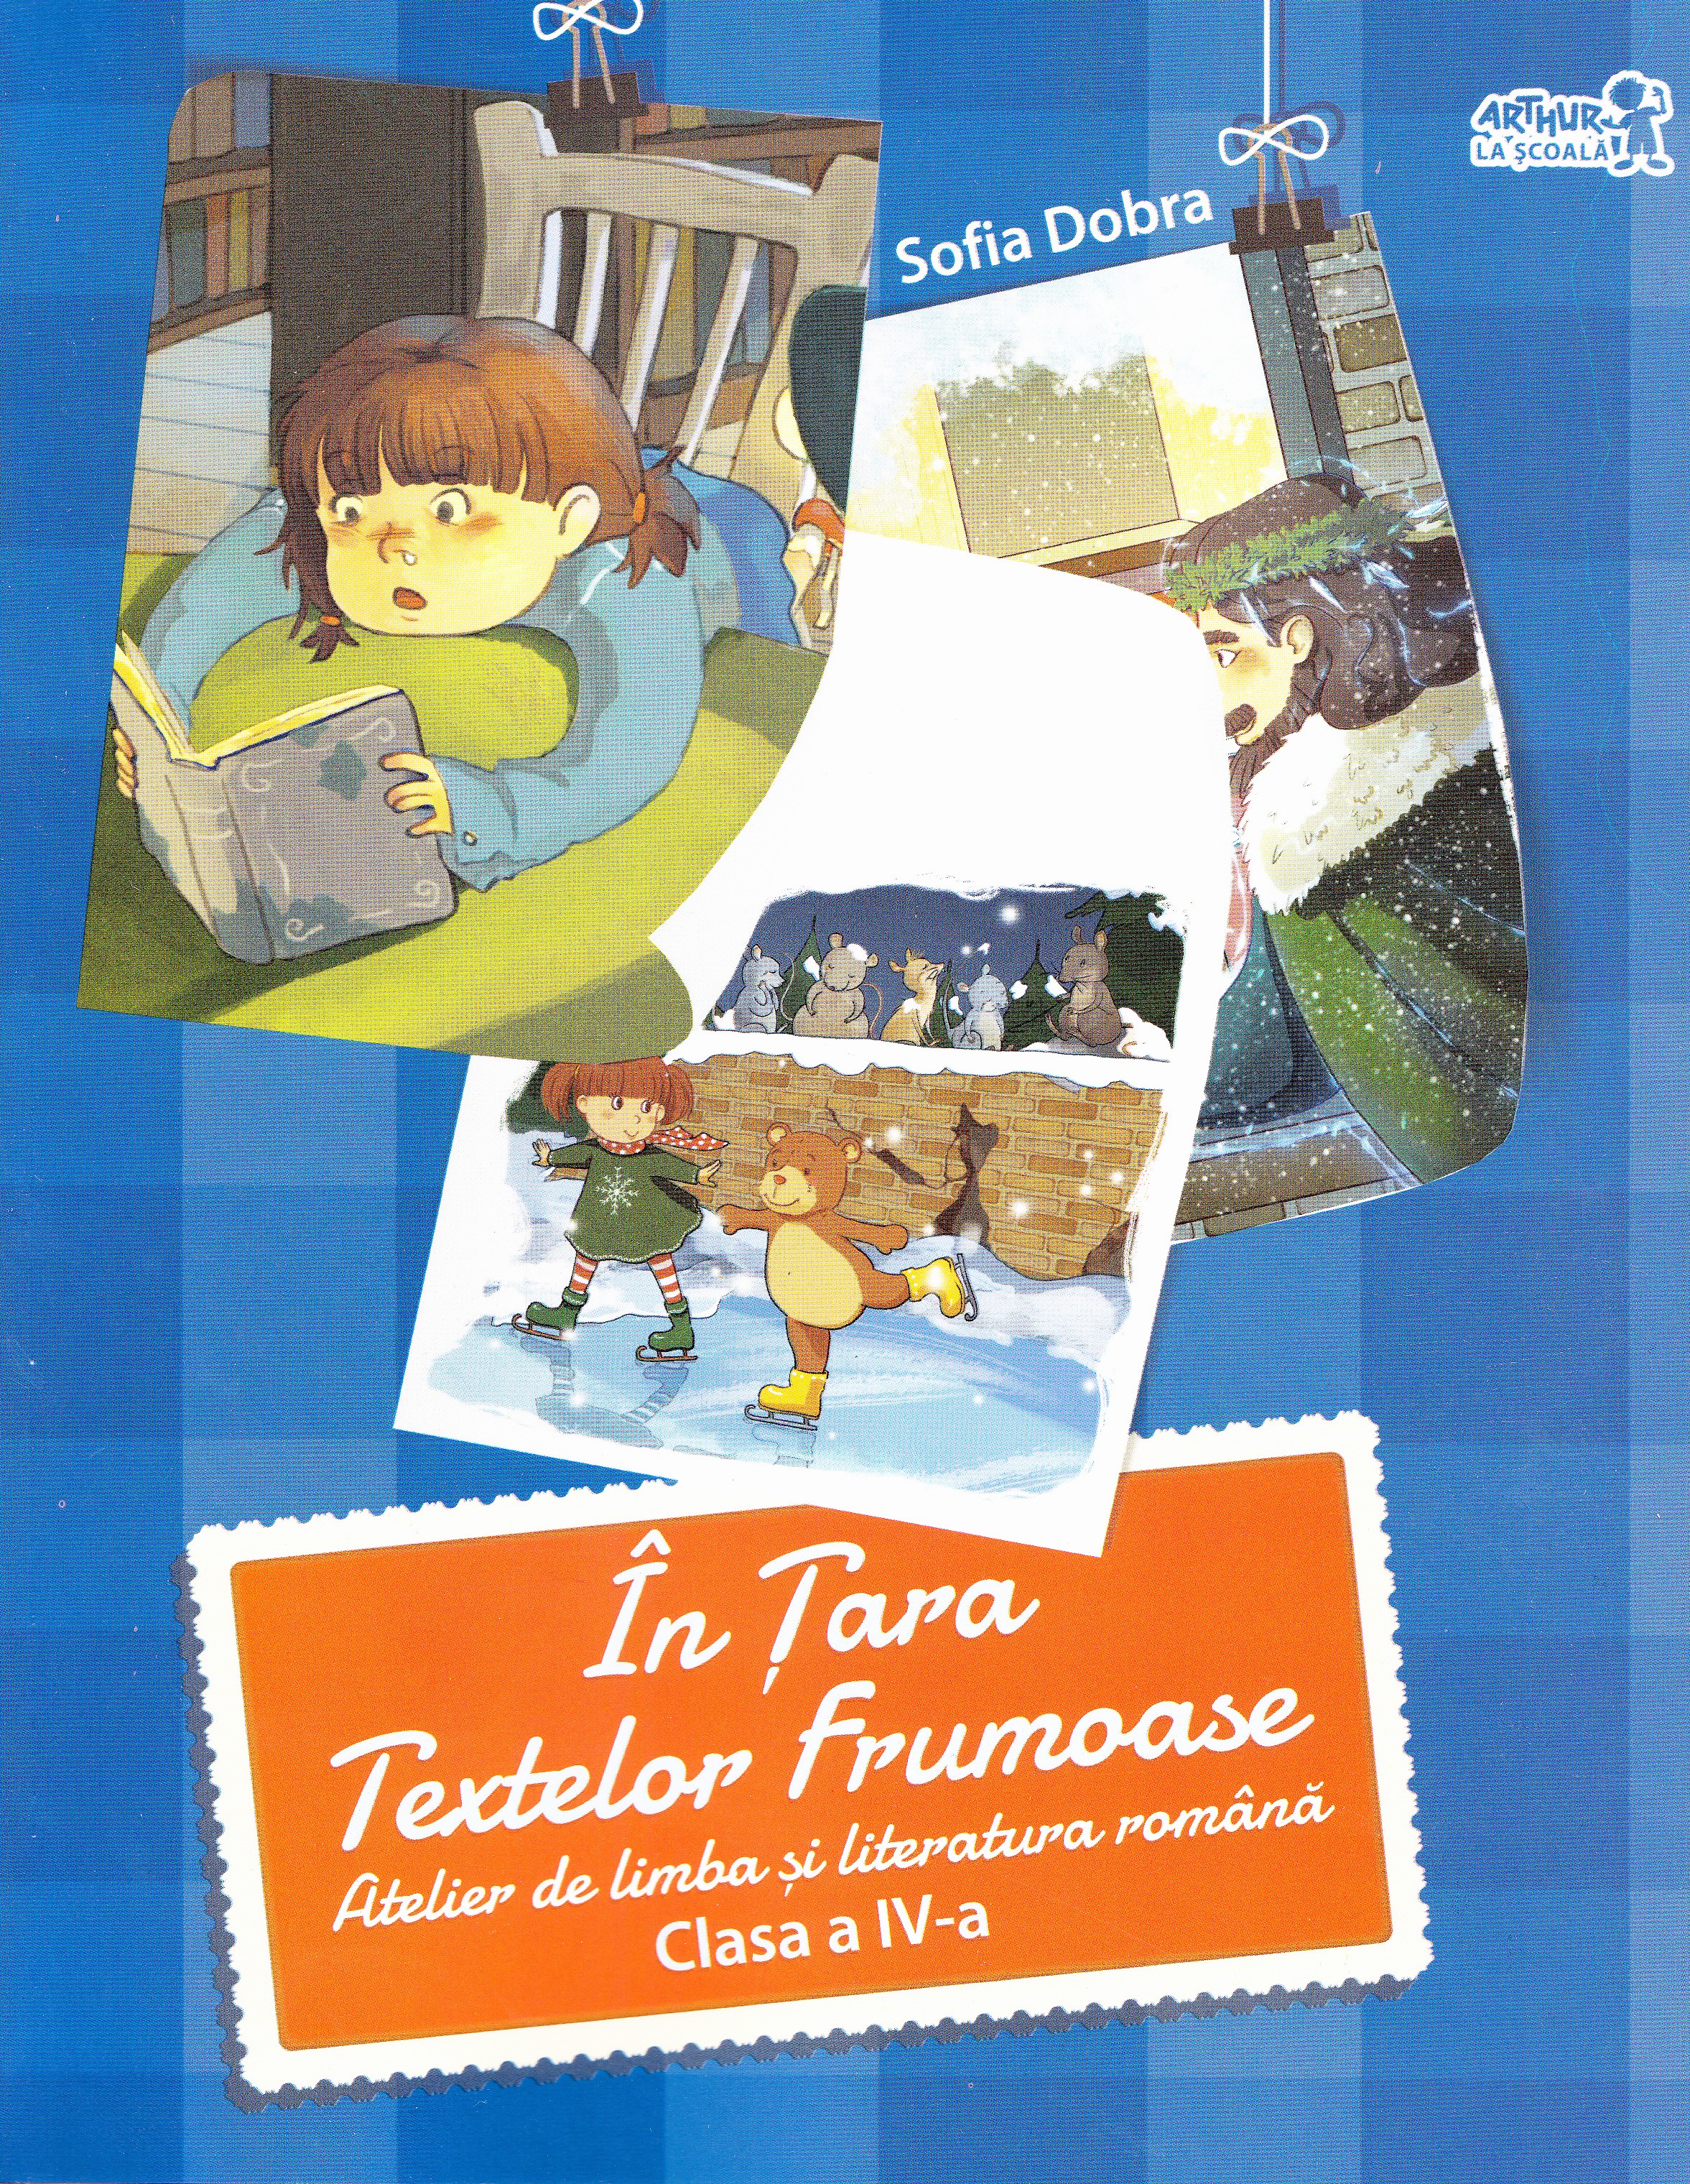 In Tara Textelor Frumoase cls 4 Atelier de romana - Sofia Dobra